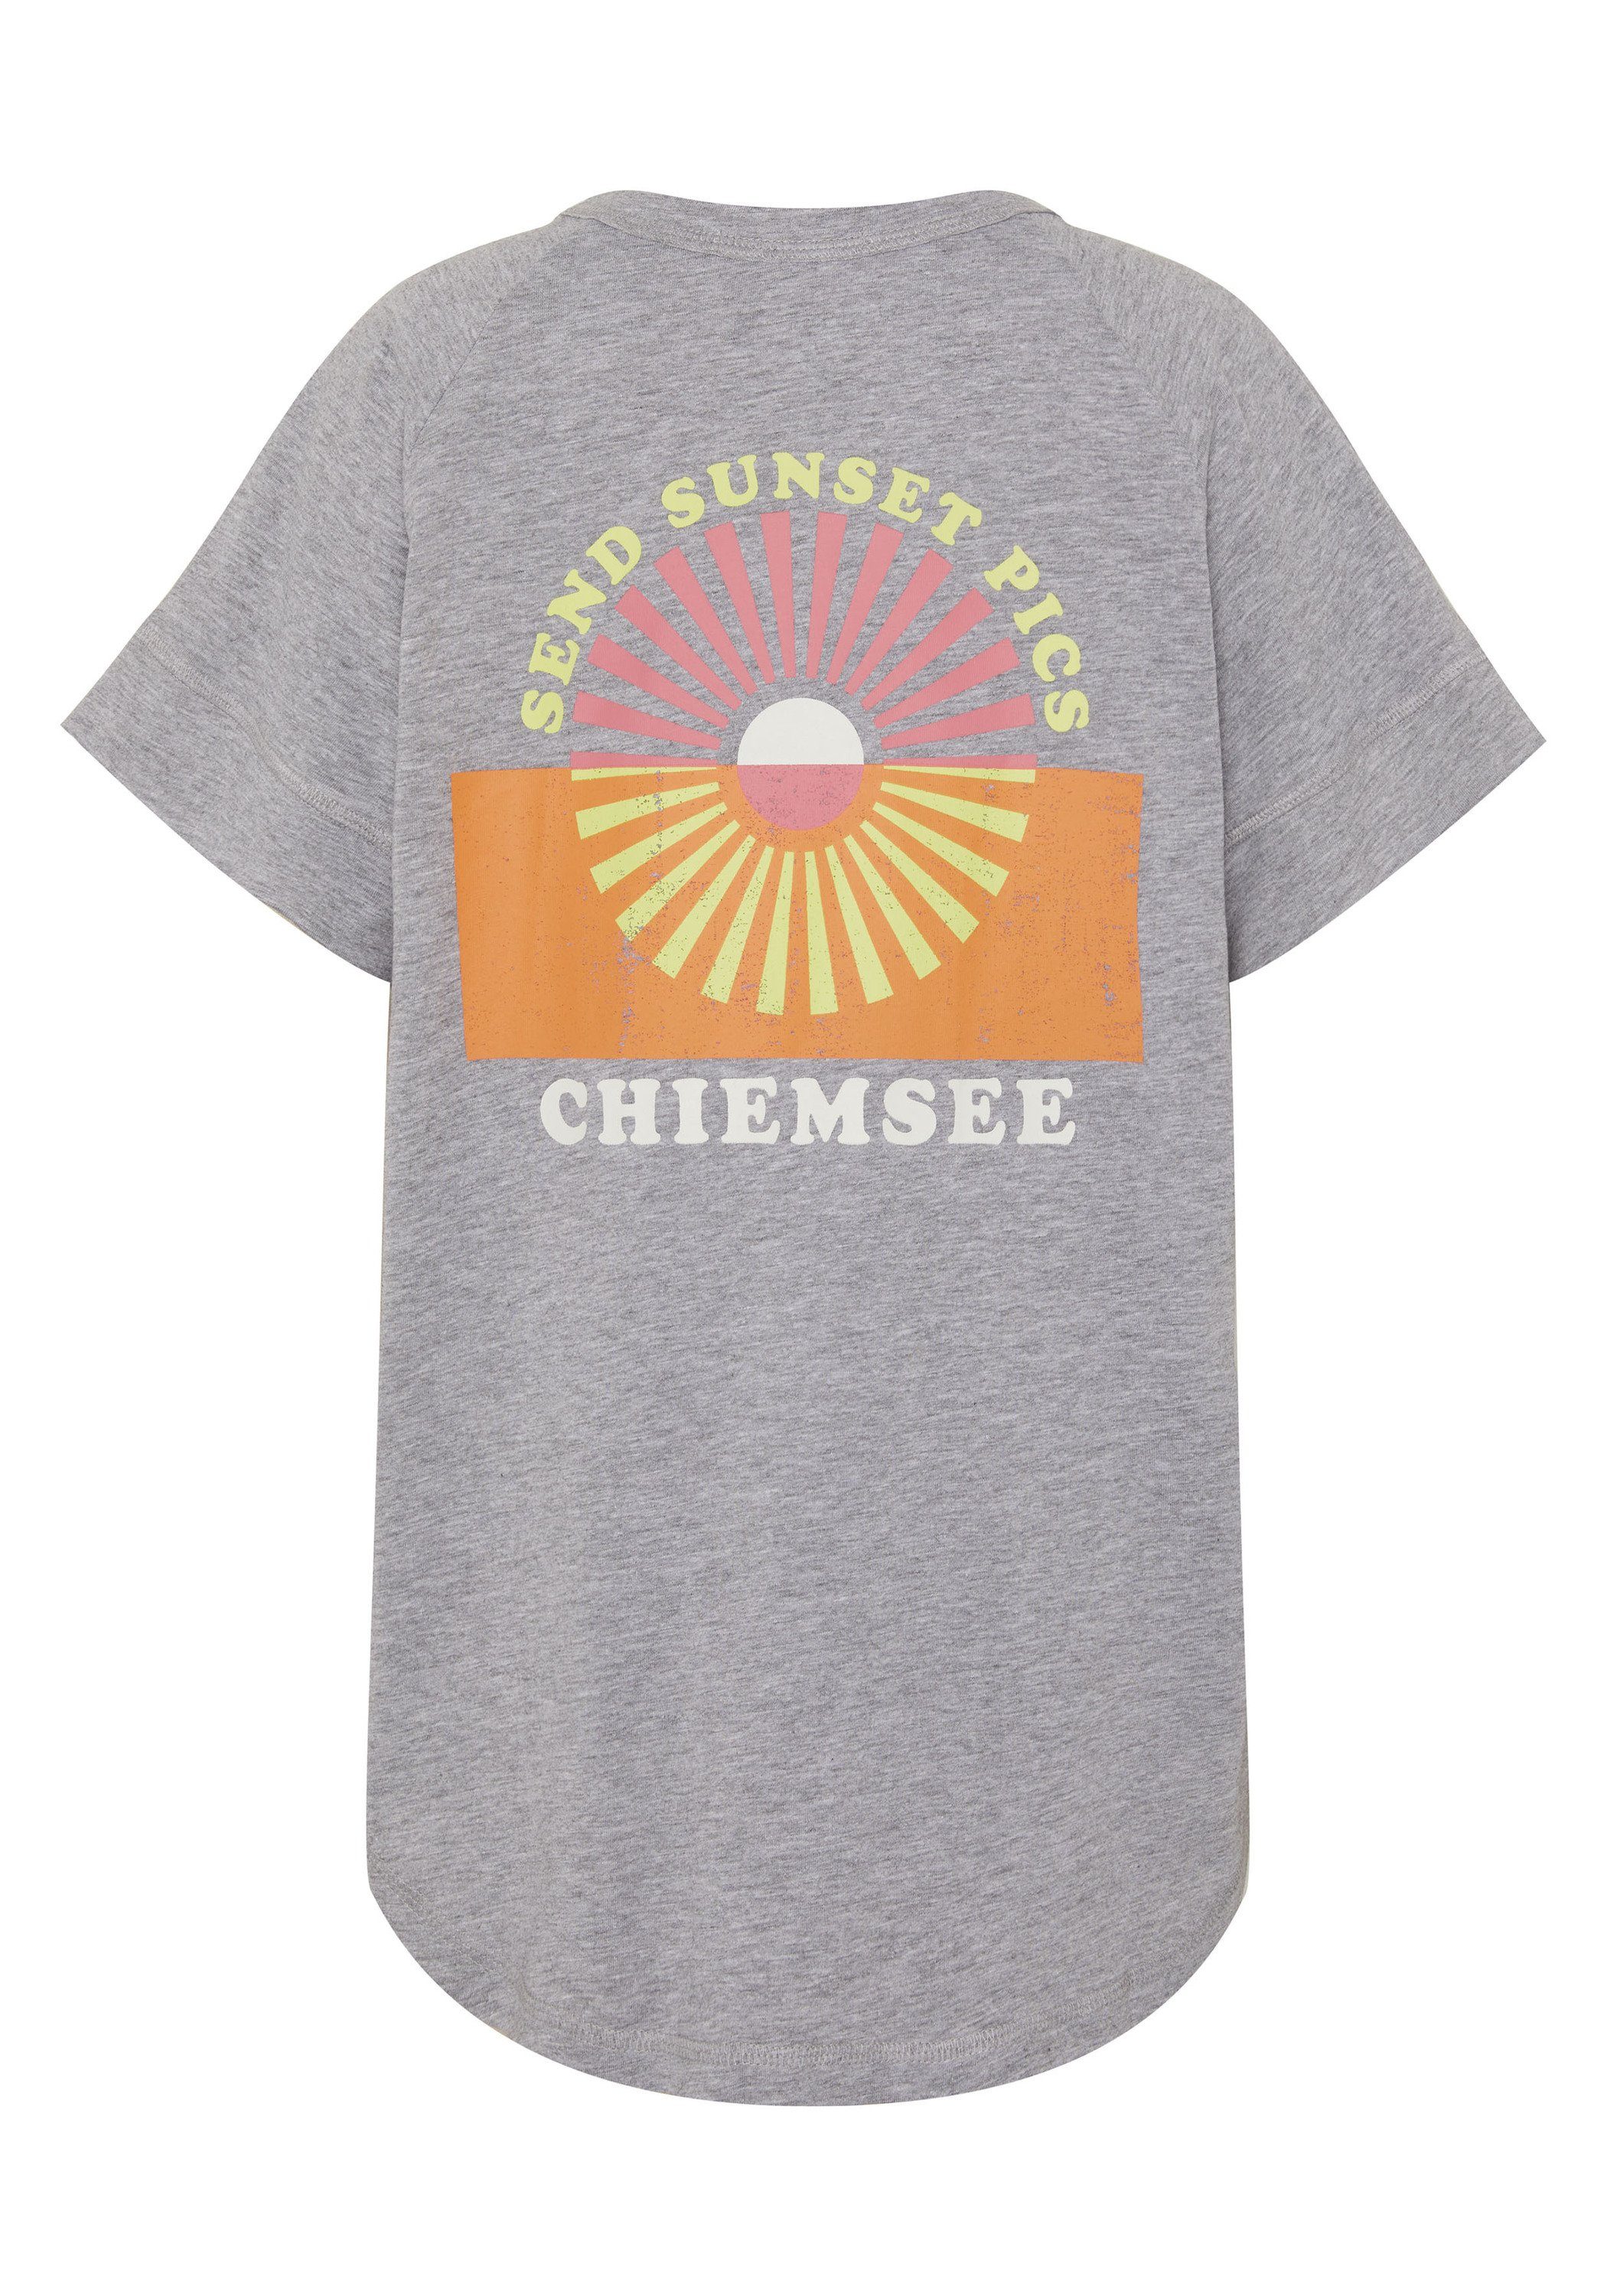 Shirt 1 aus 17-4402M Jersey Neutral Gray mit Print-Shirt Print Melange Chiemsee